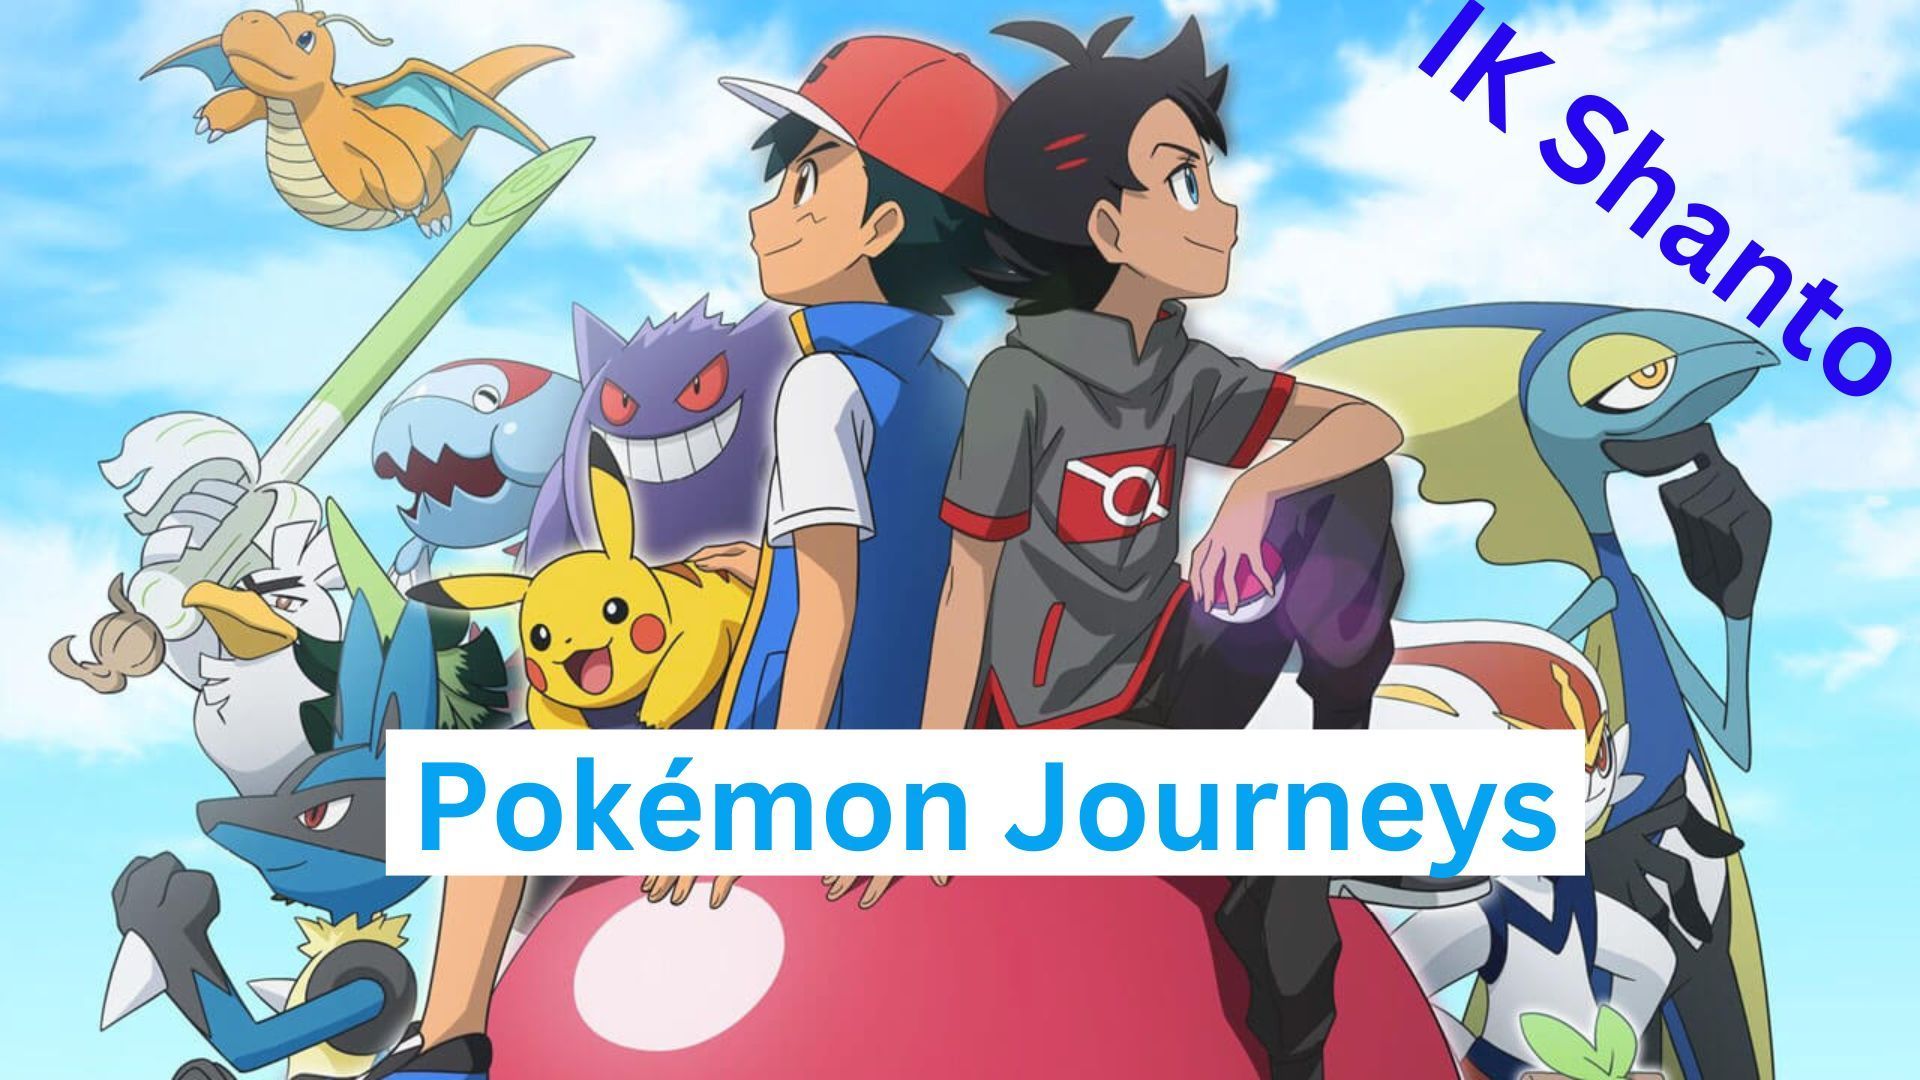 Pokémon Journeys ep 3 - Bilibili